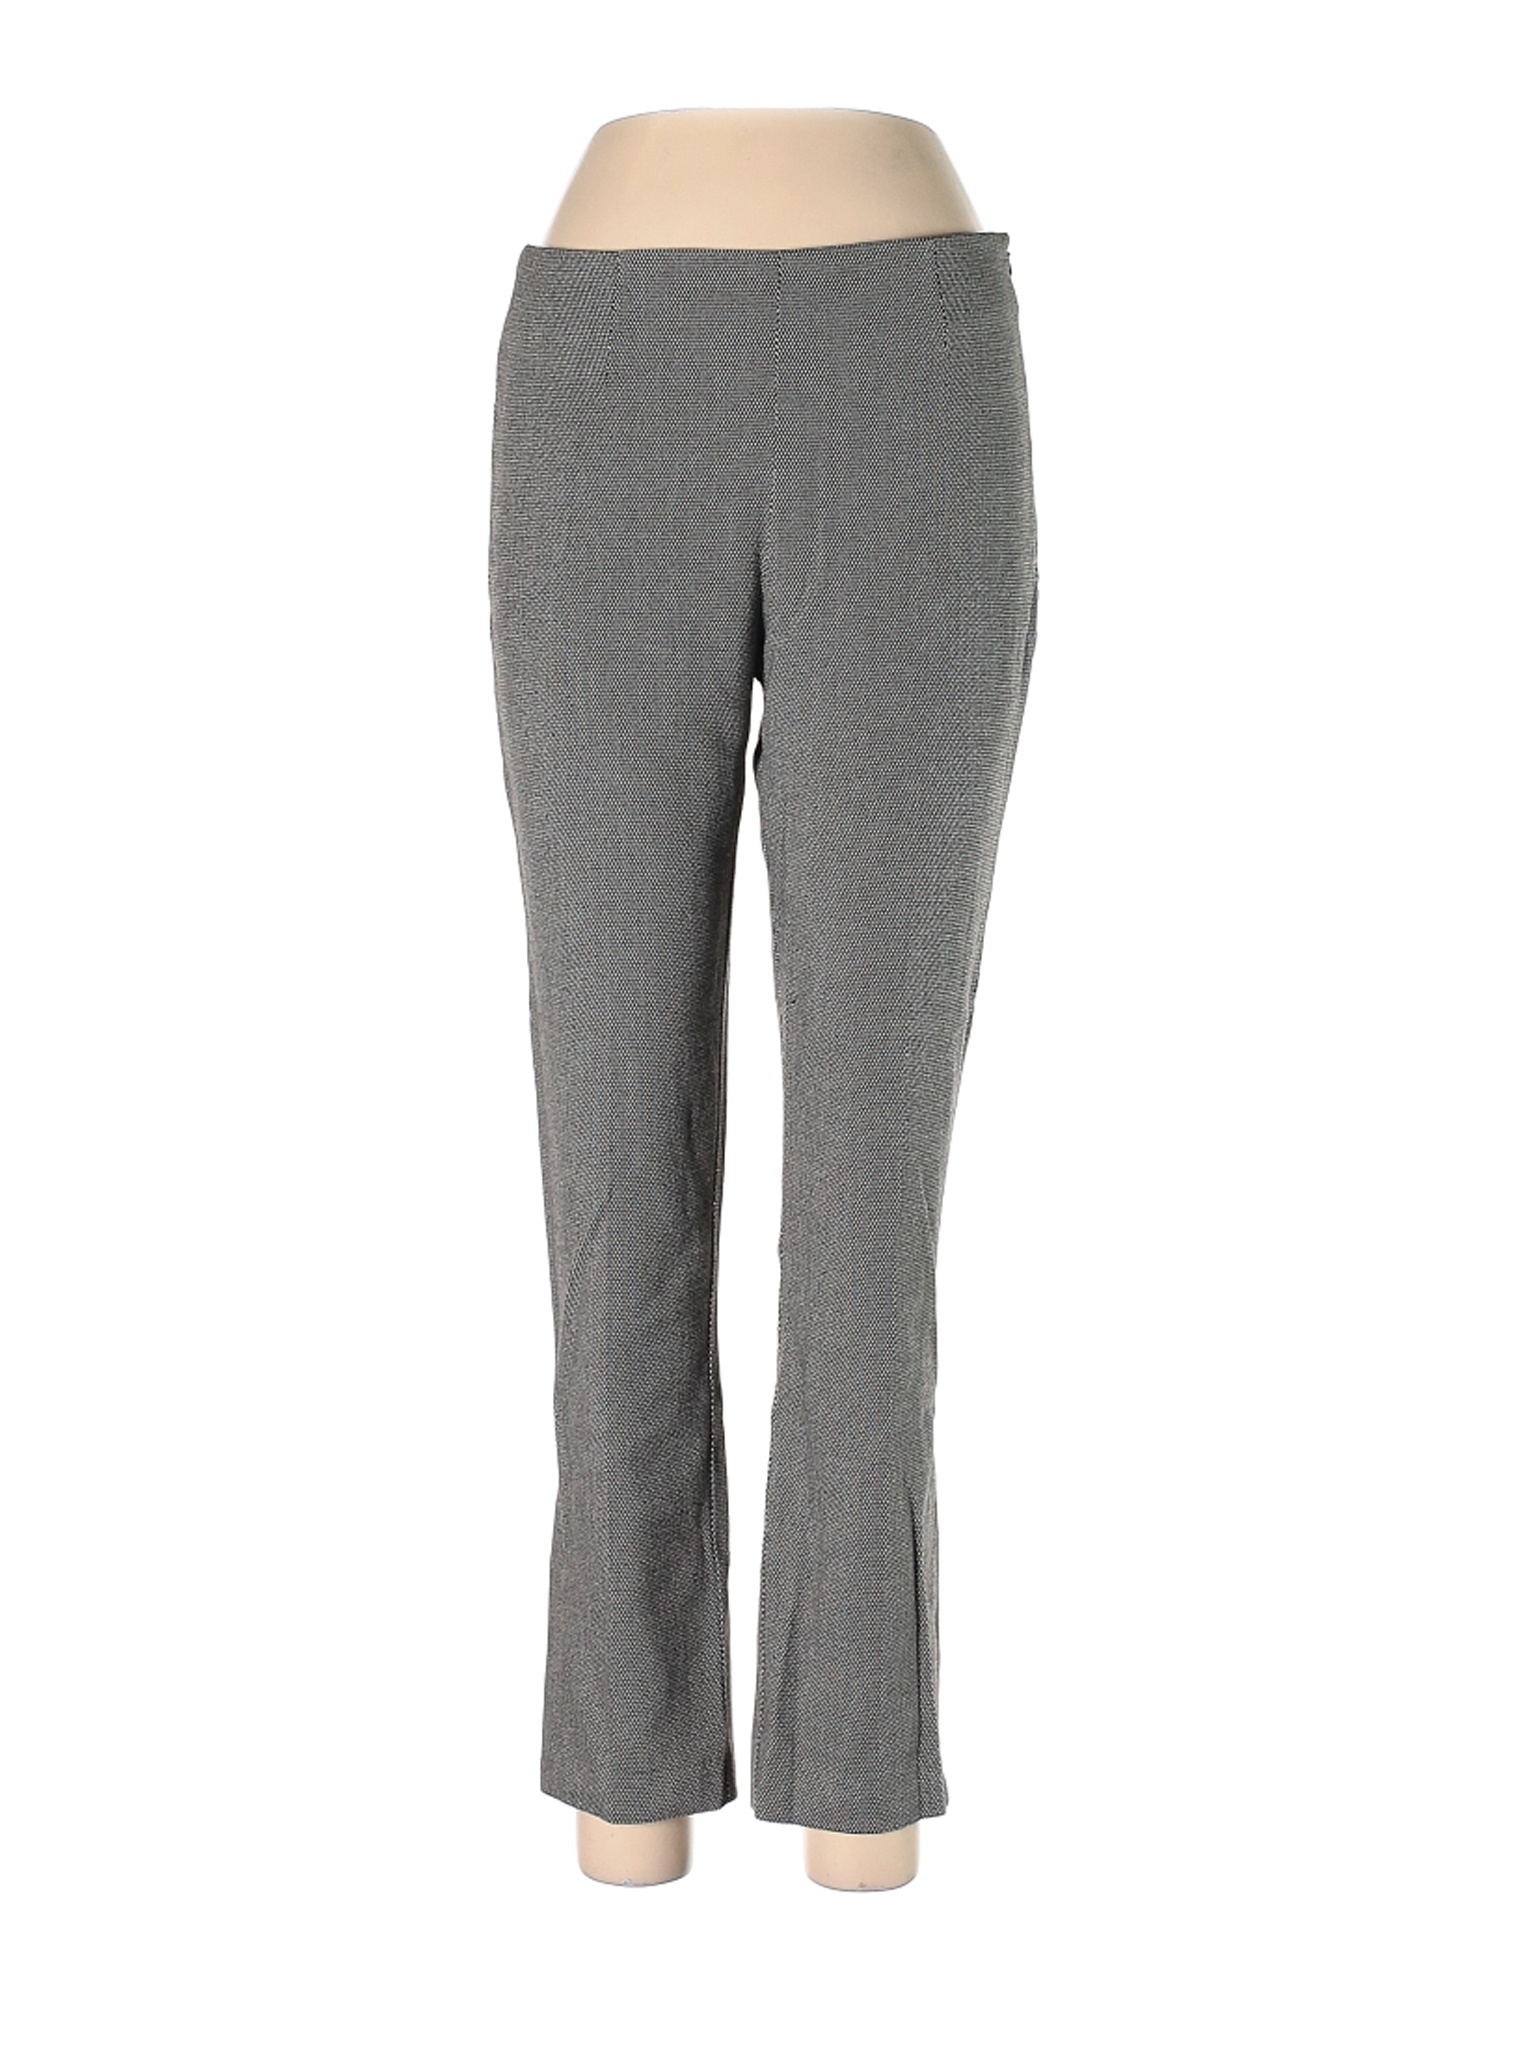 Eric Signature Women Gray Dress Pants 6 | eBay